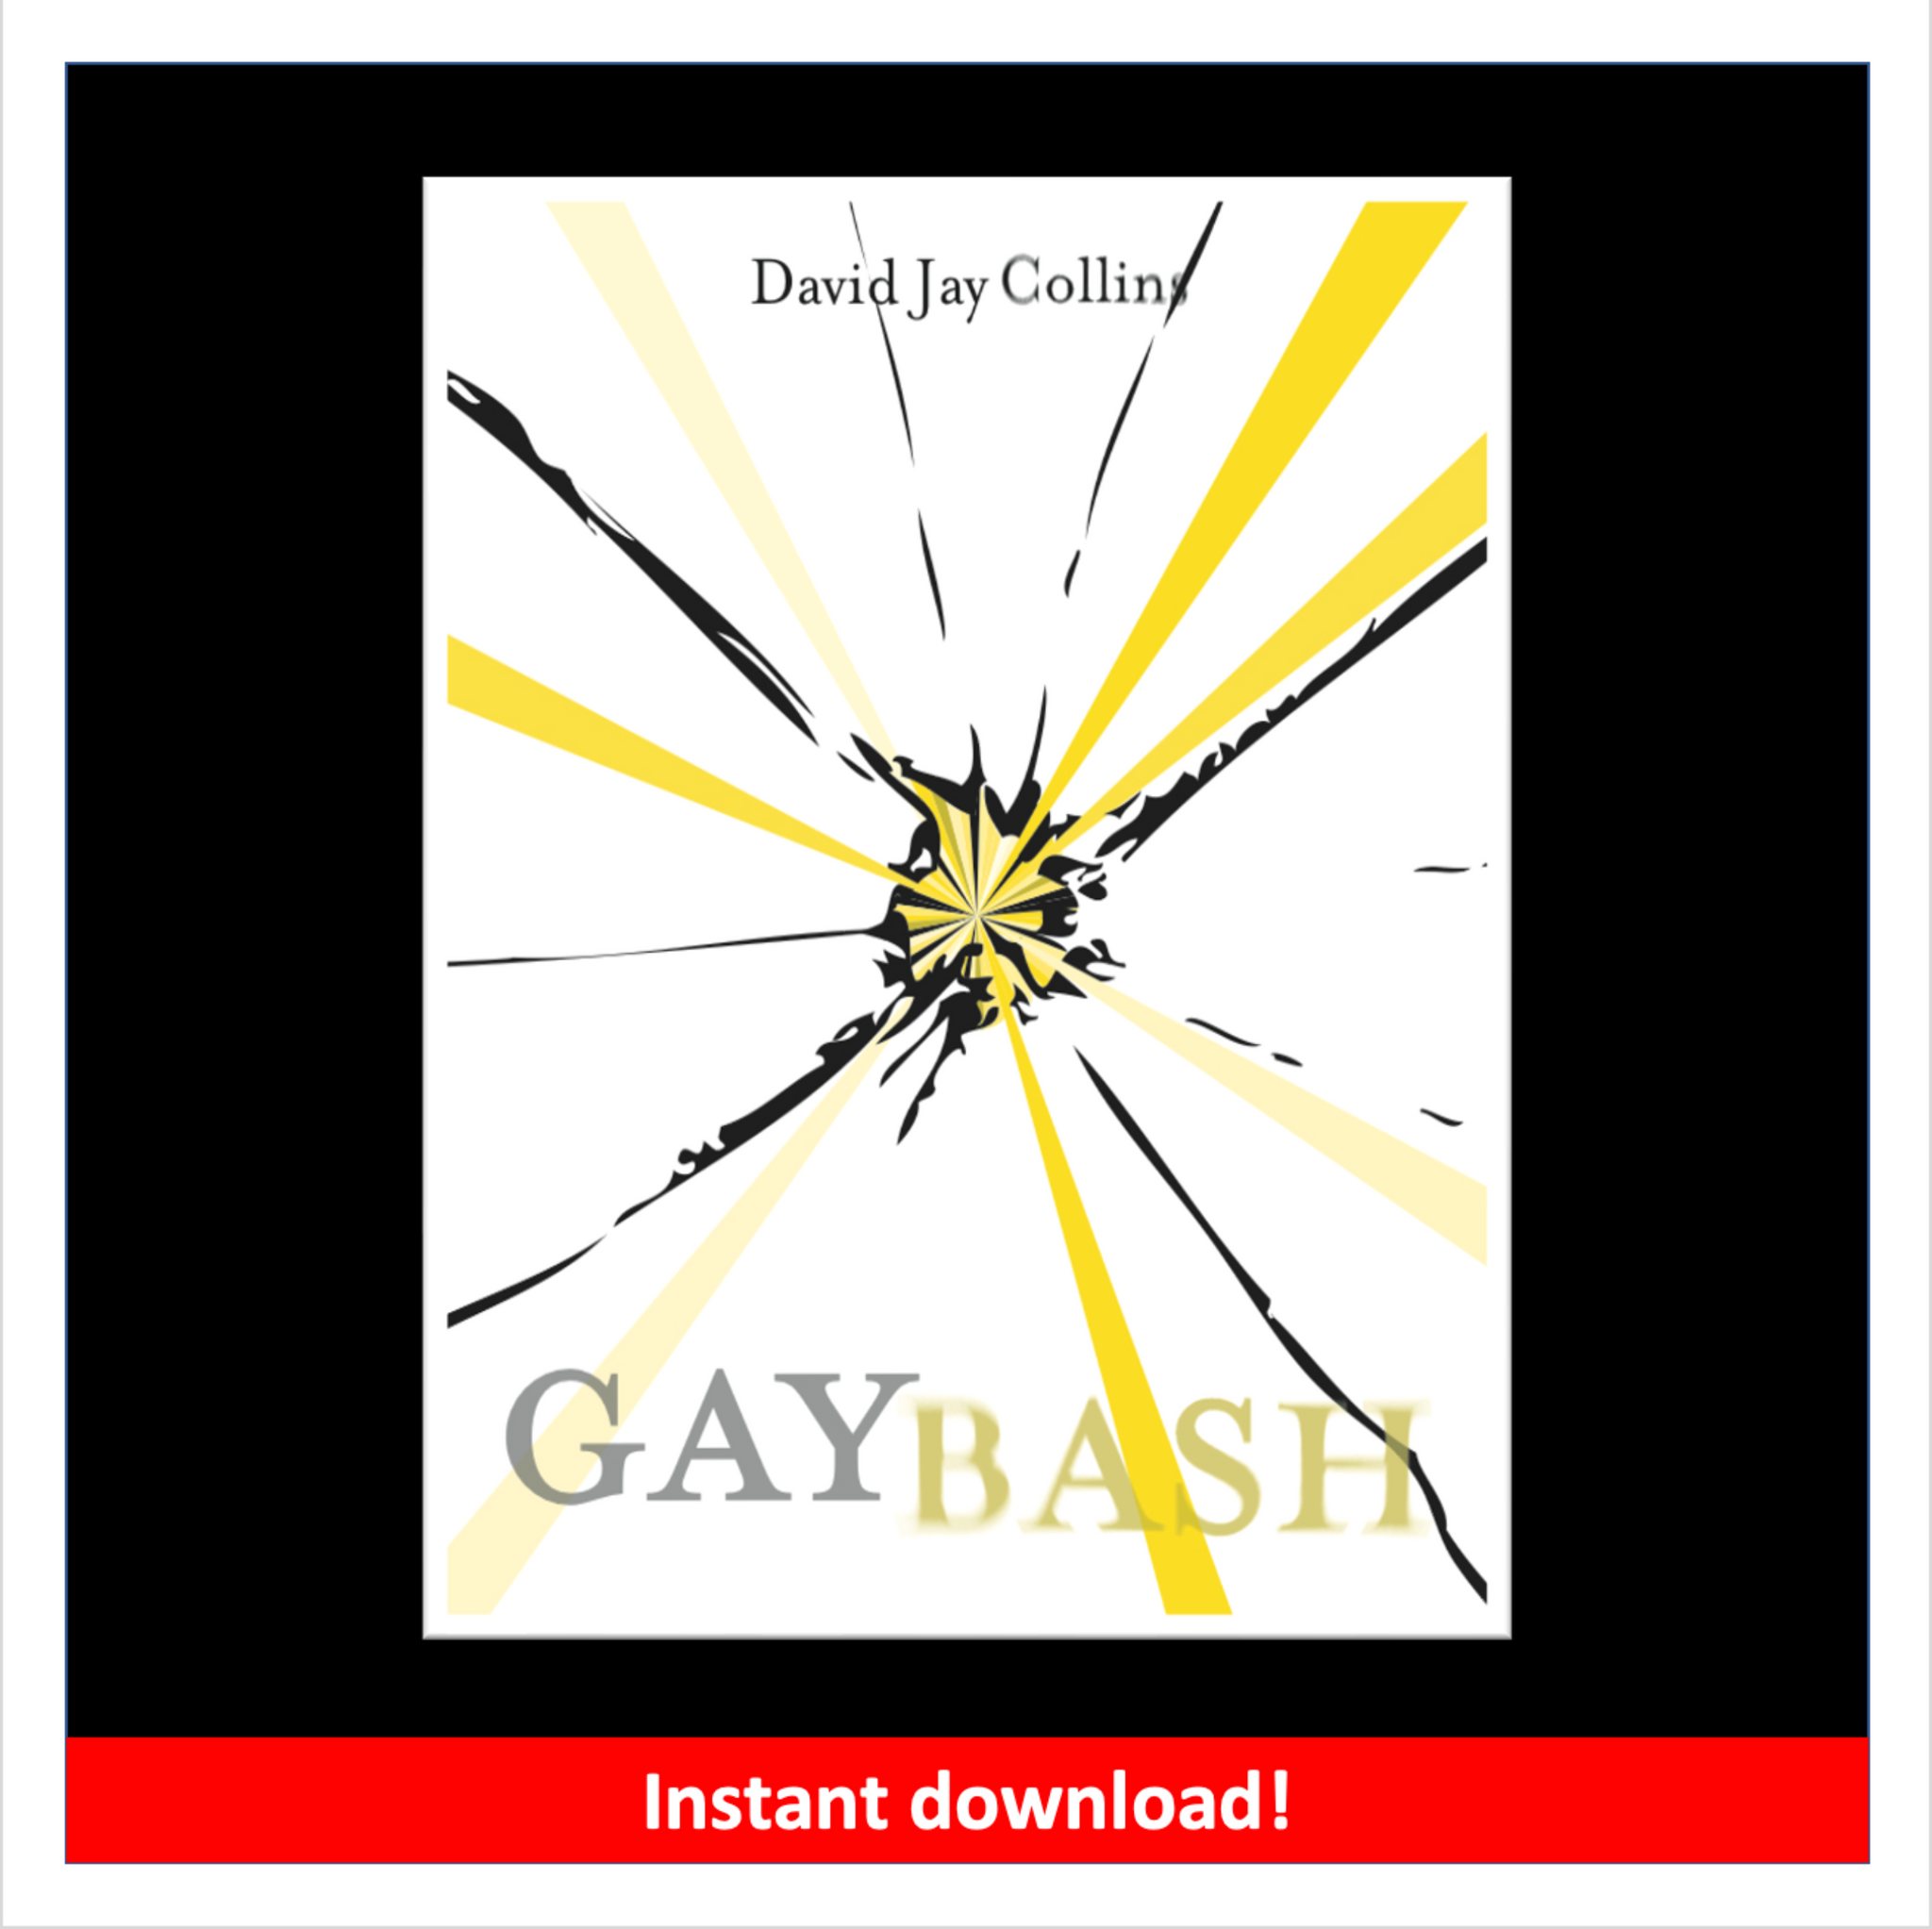 Gaybash ebook